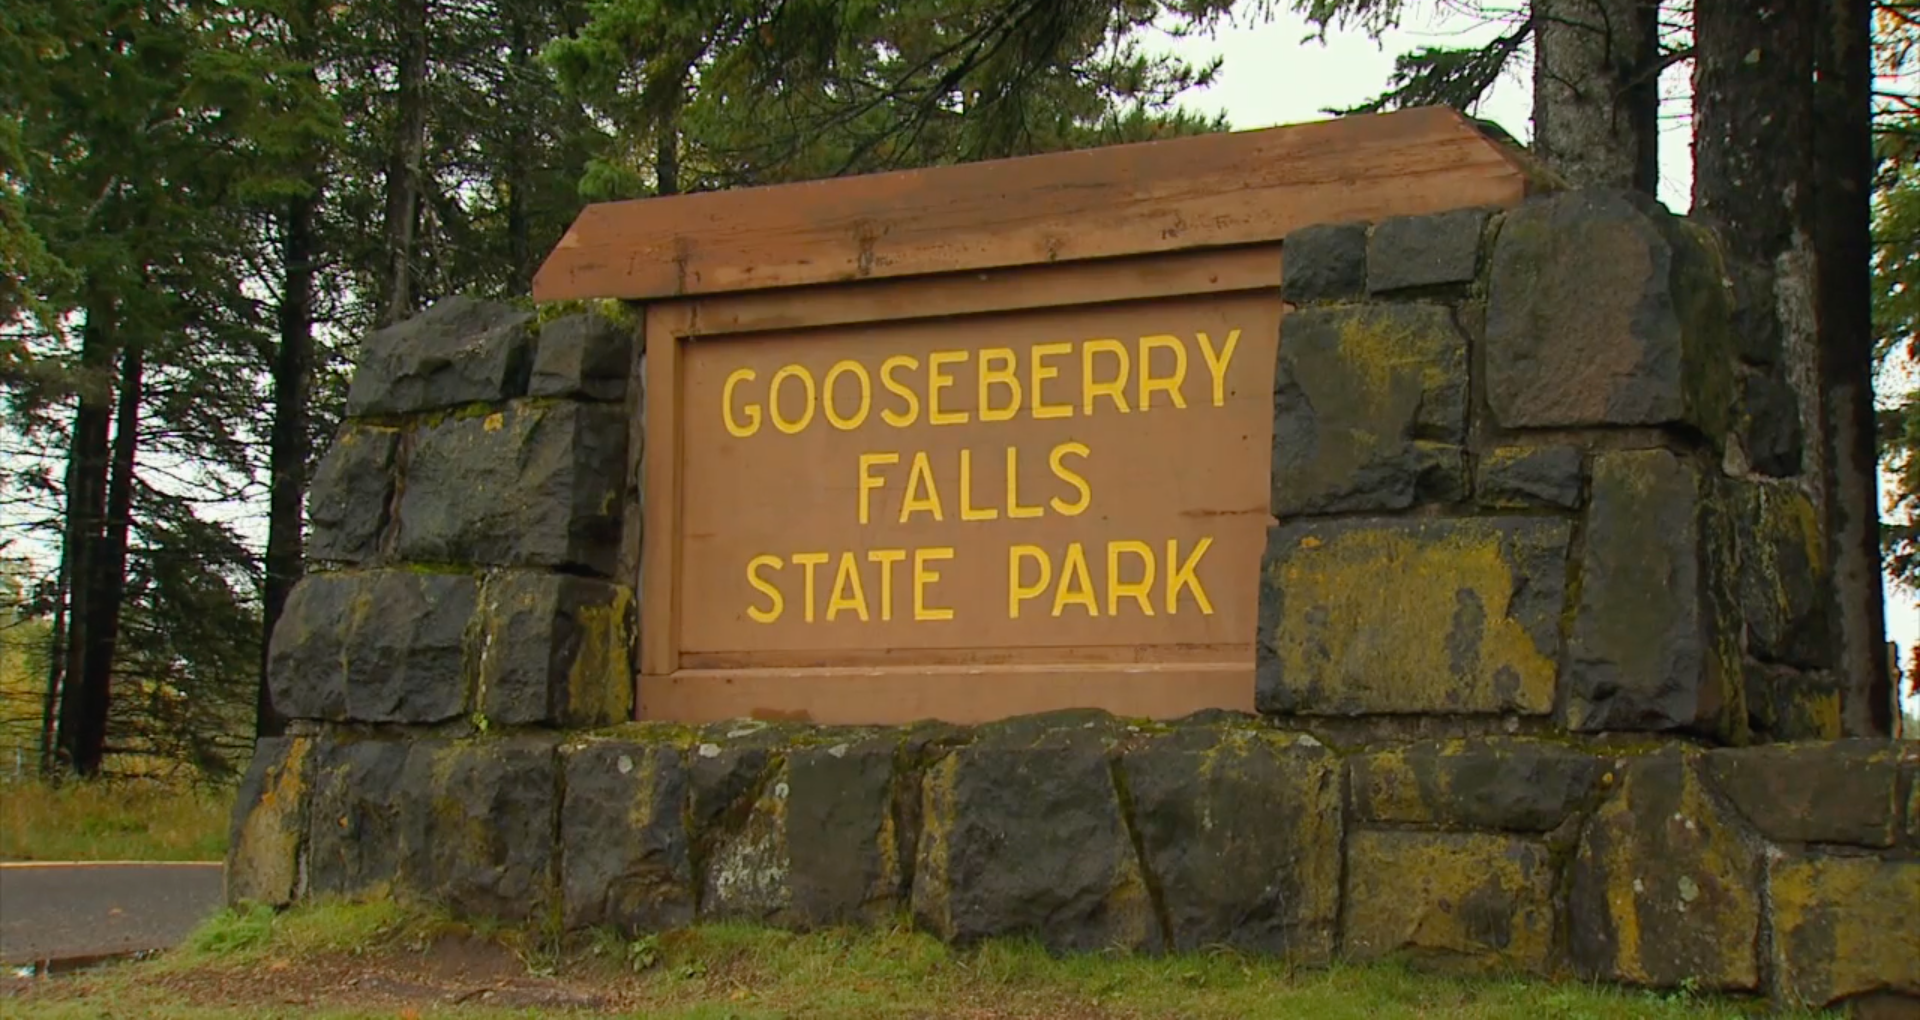 Gooseberry falls park state minnesota north shore